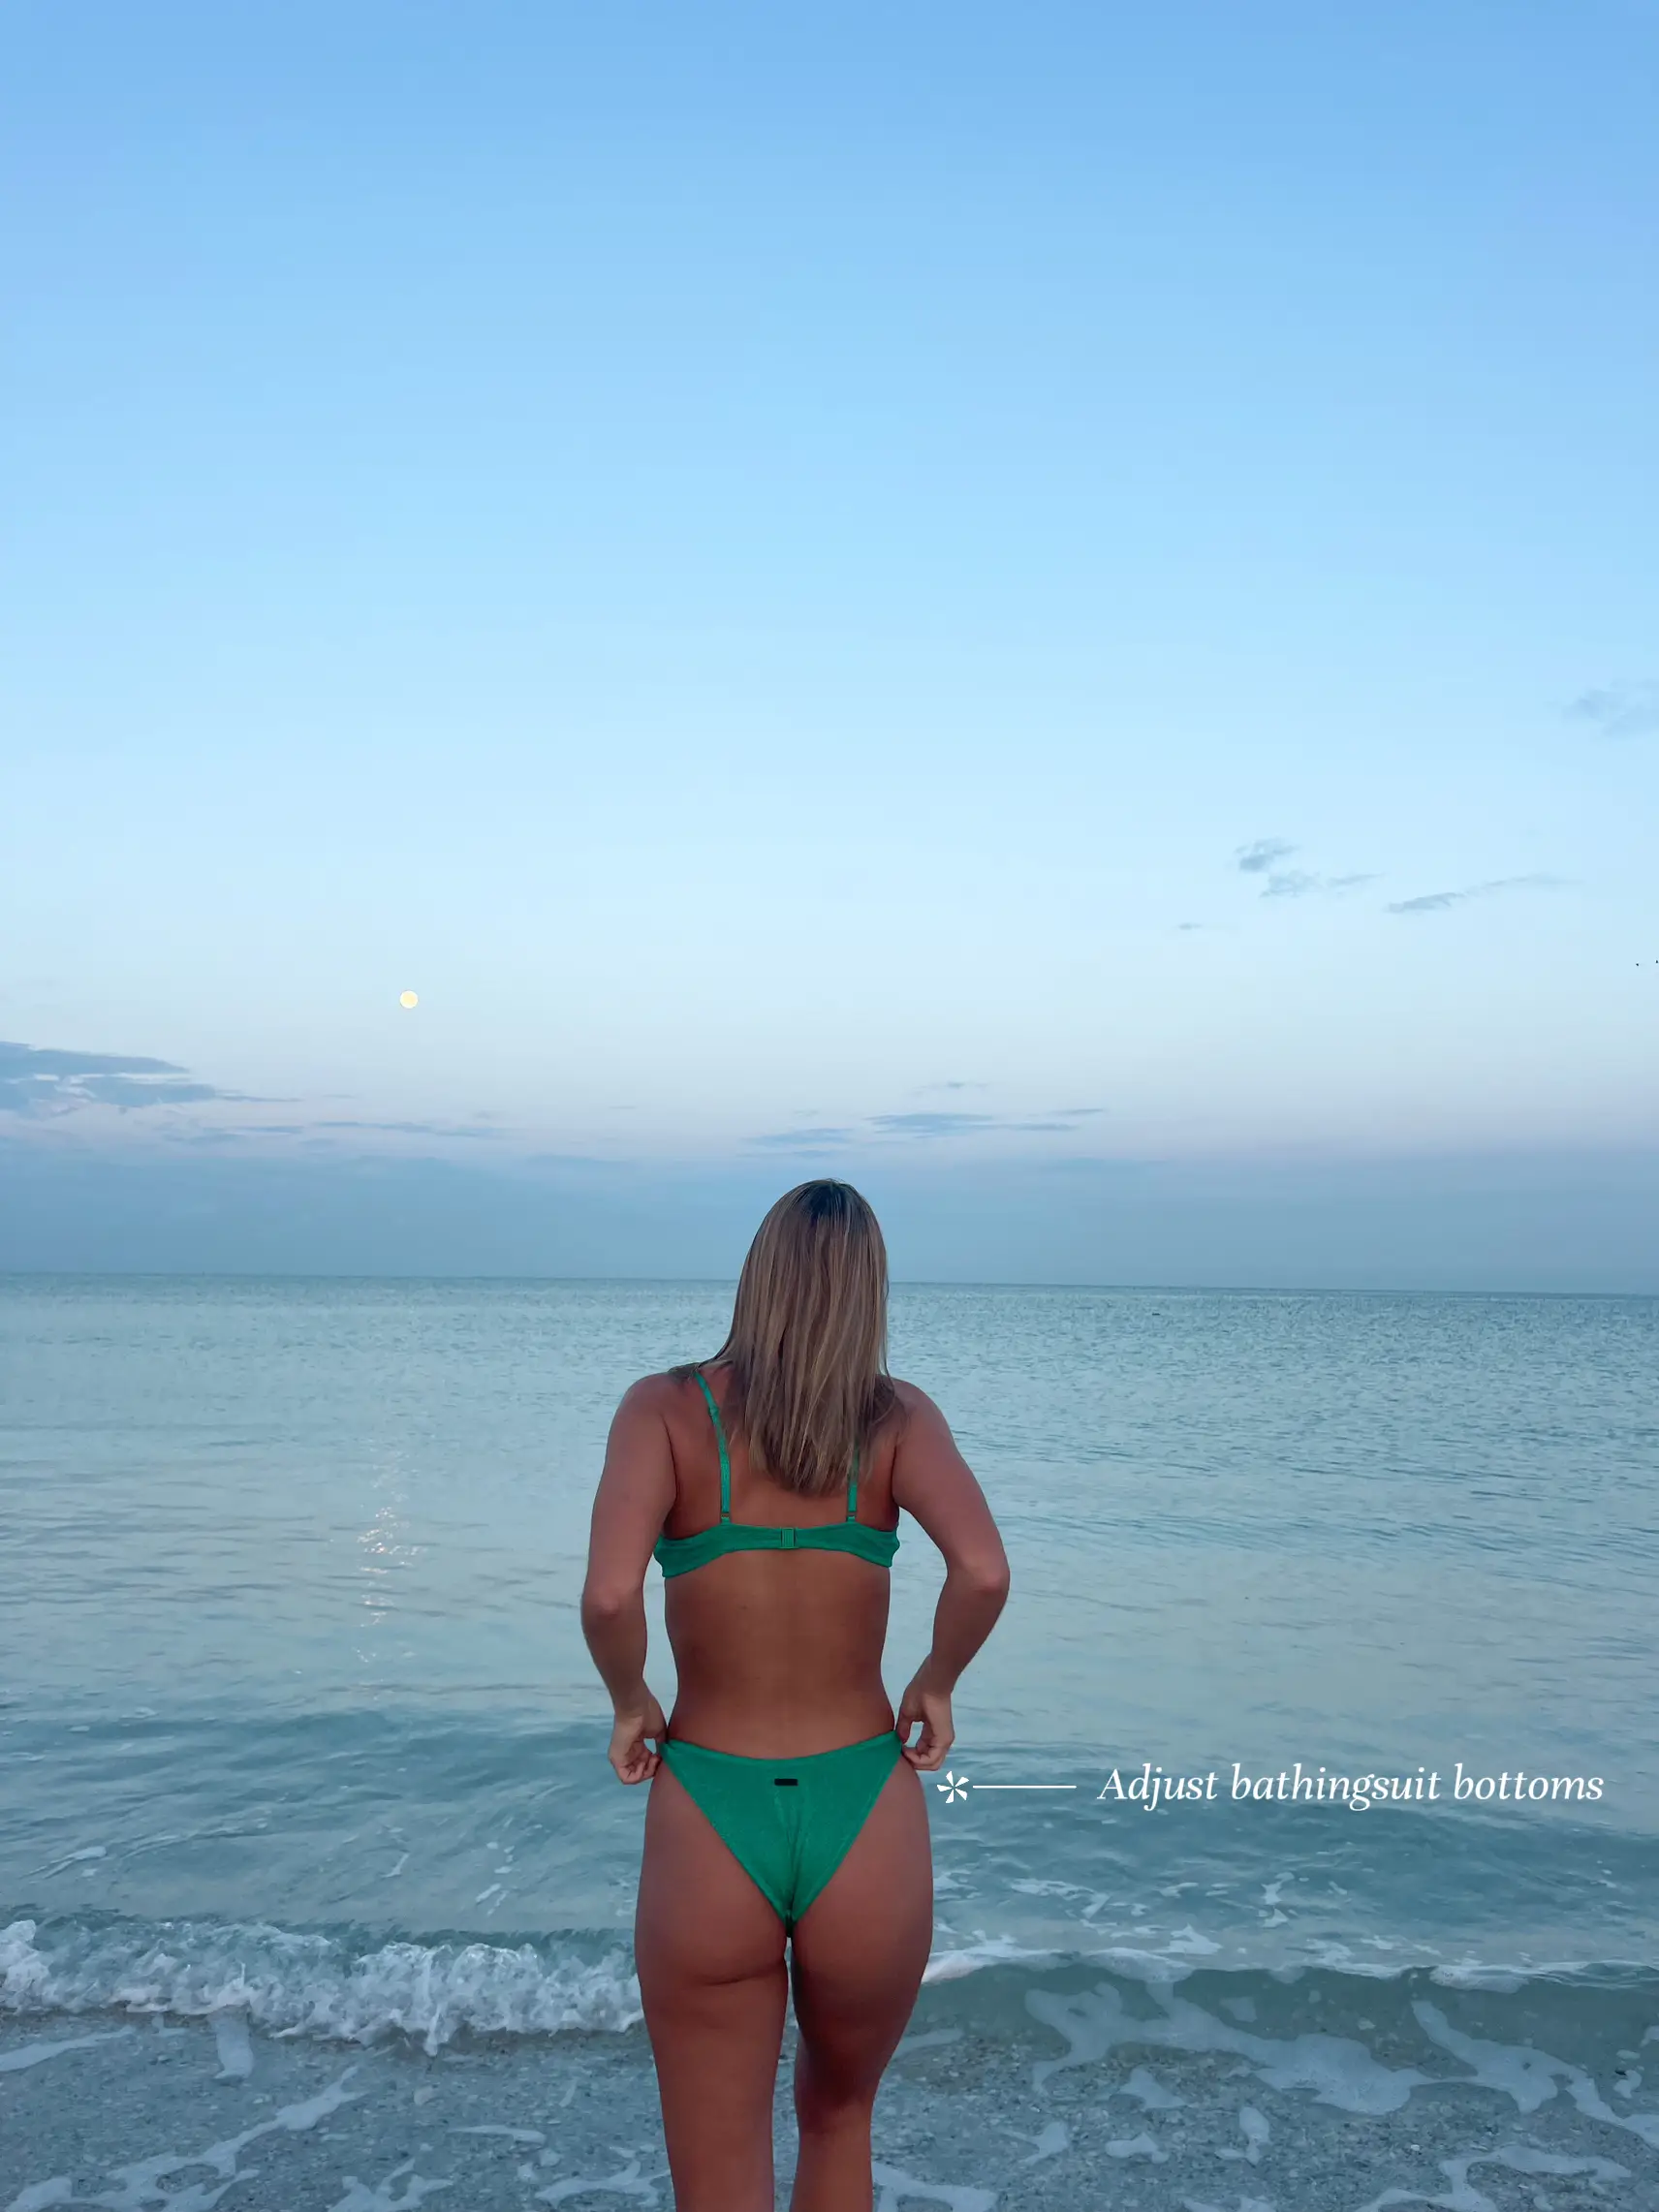  A woman in a bikini is standing on a beach.